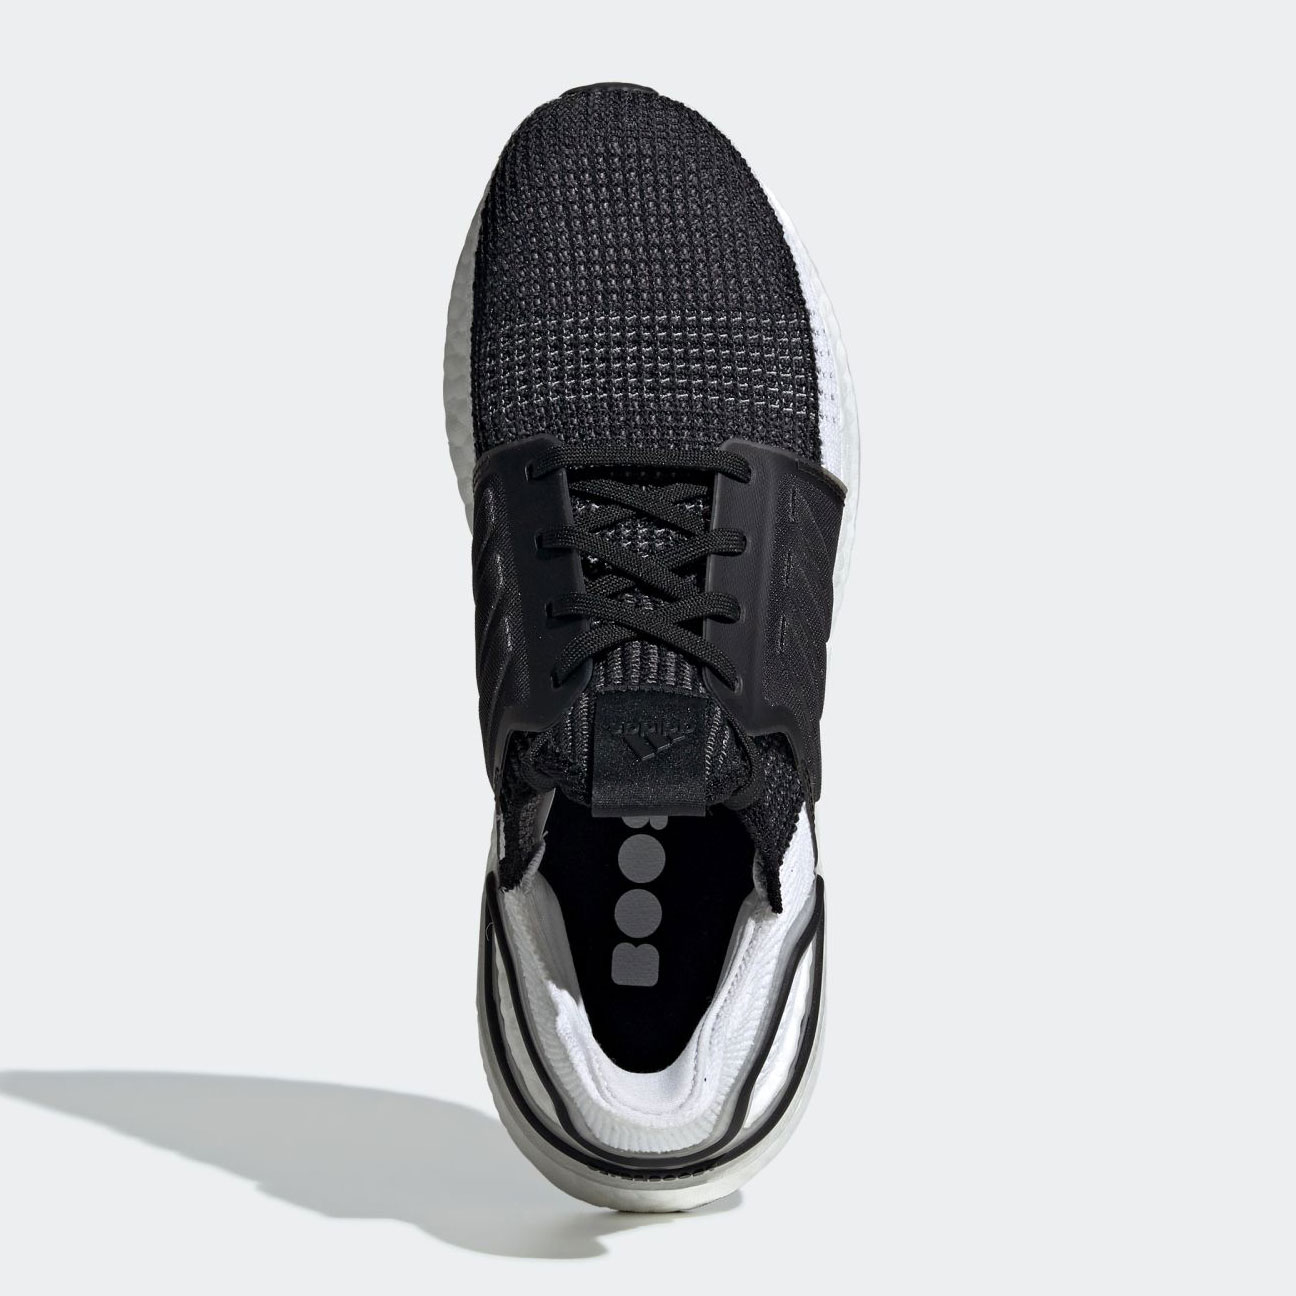 adidas Ultra Boost 2019 Oreo B37704 Release Info | SneakerNews.com